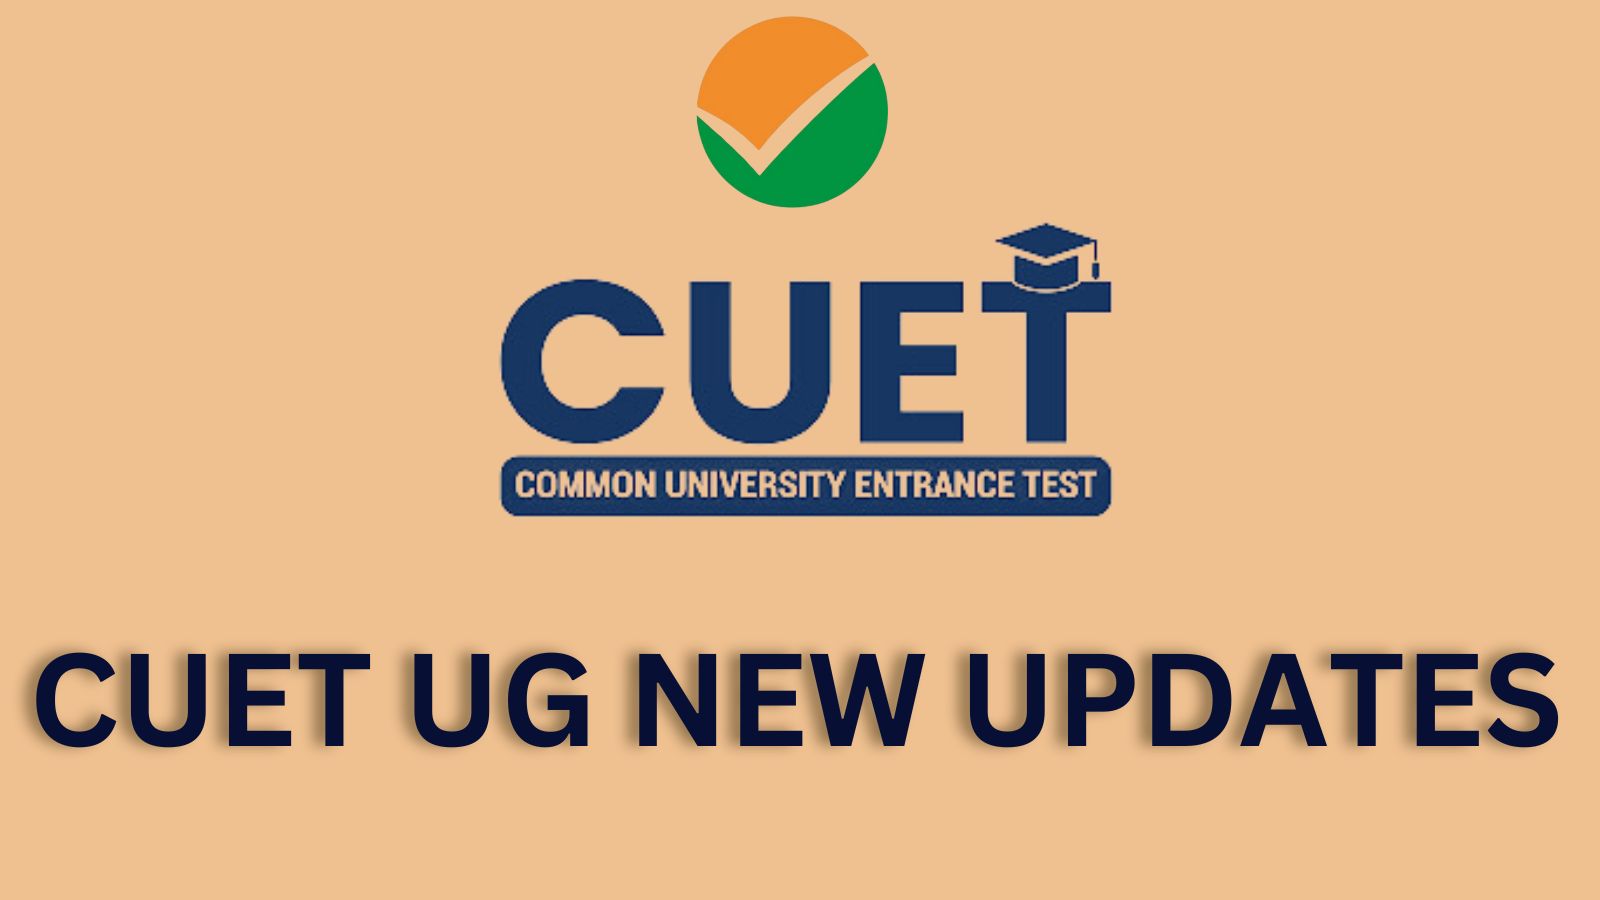 CUET UG NEW UPDATES